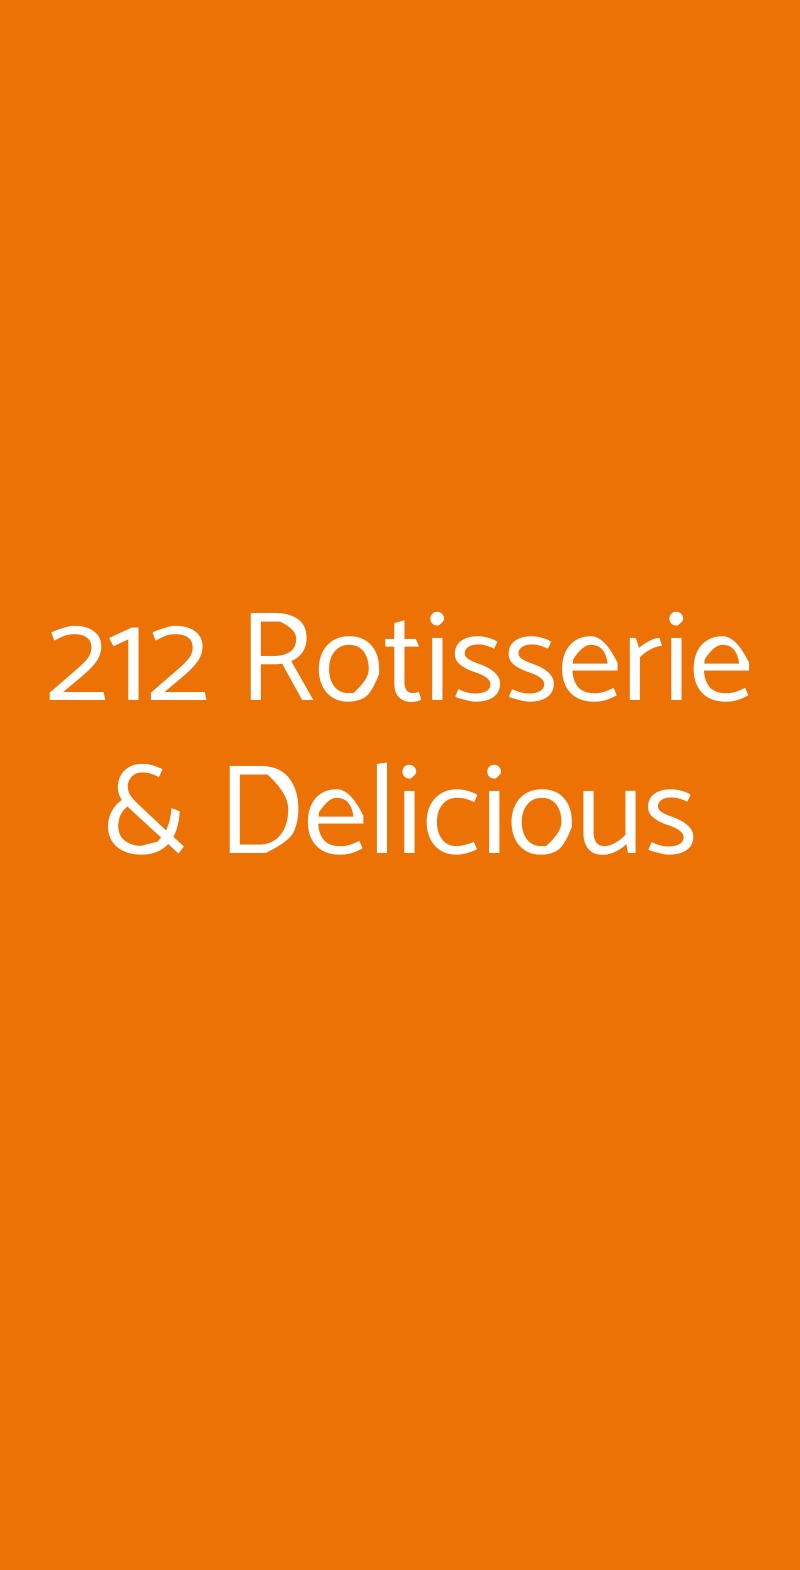 212 Rotisserie & Delicious Milano menù 1 pagina